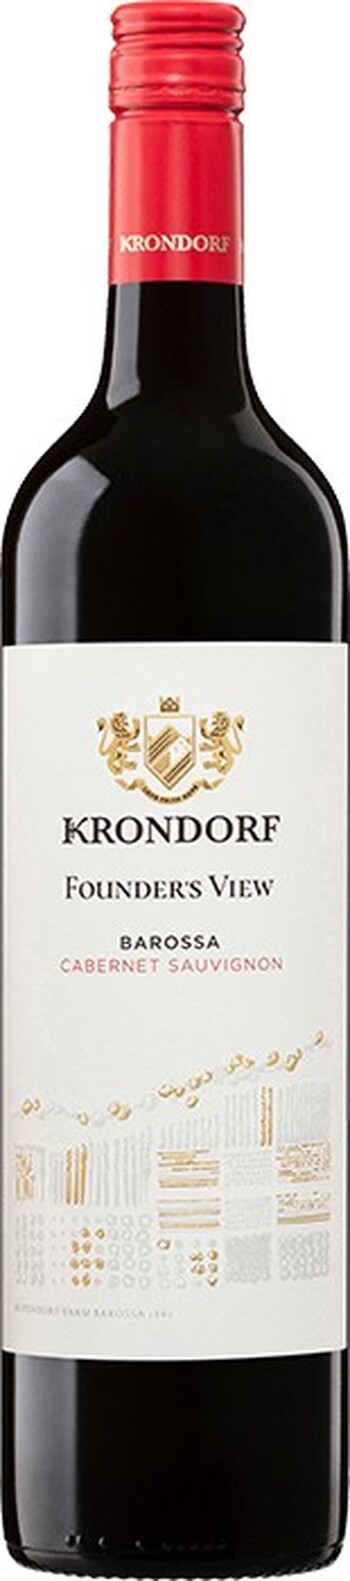 Krondorf Founder's View Barossa Cabernet Sauvignon